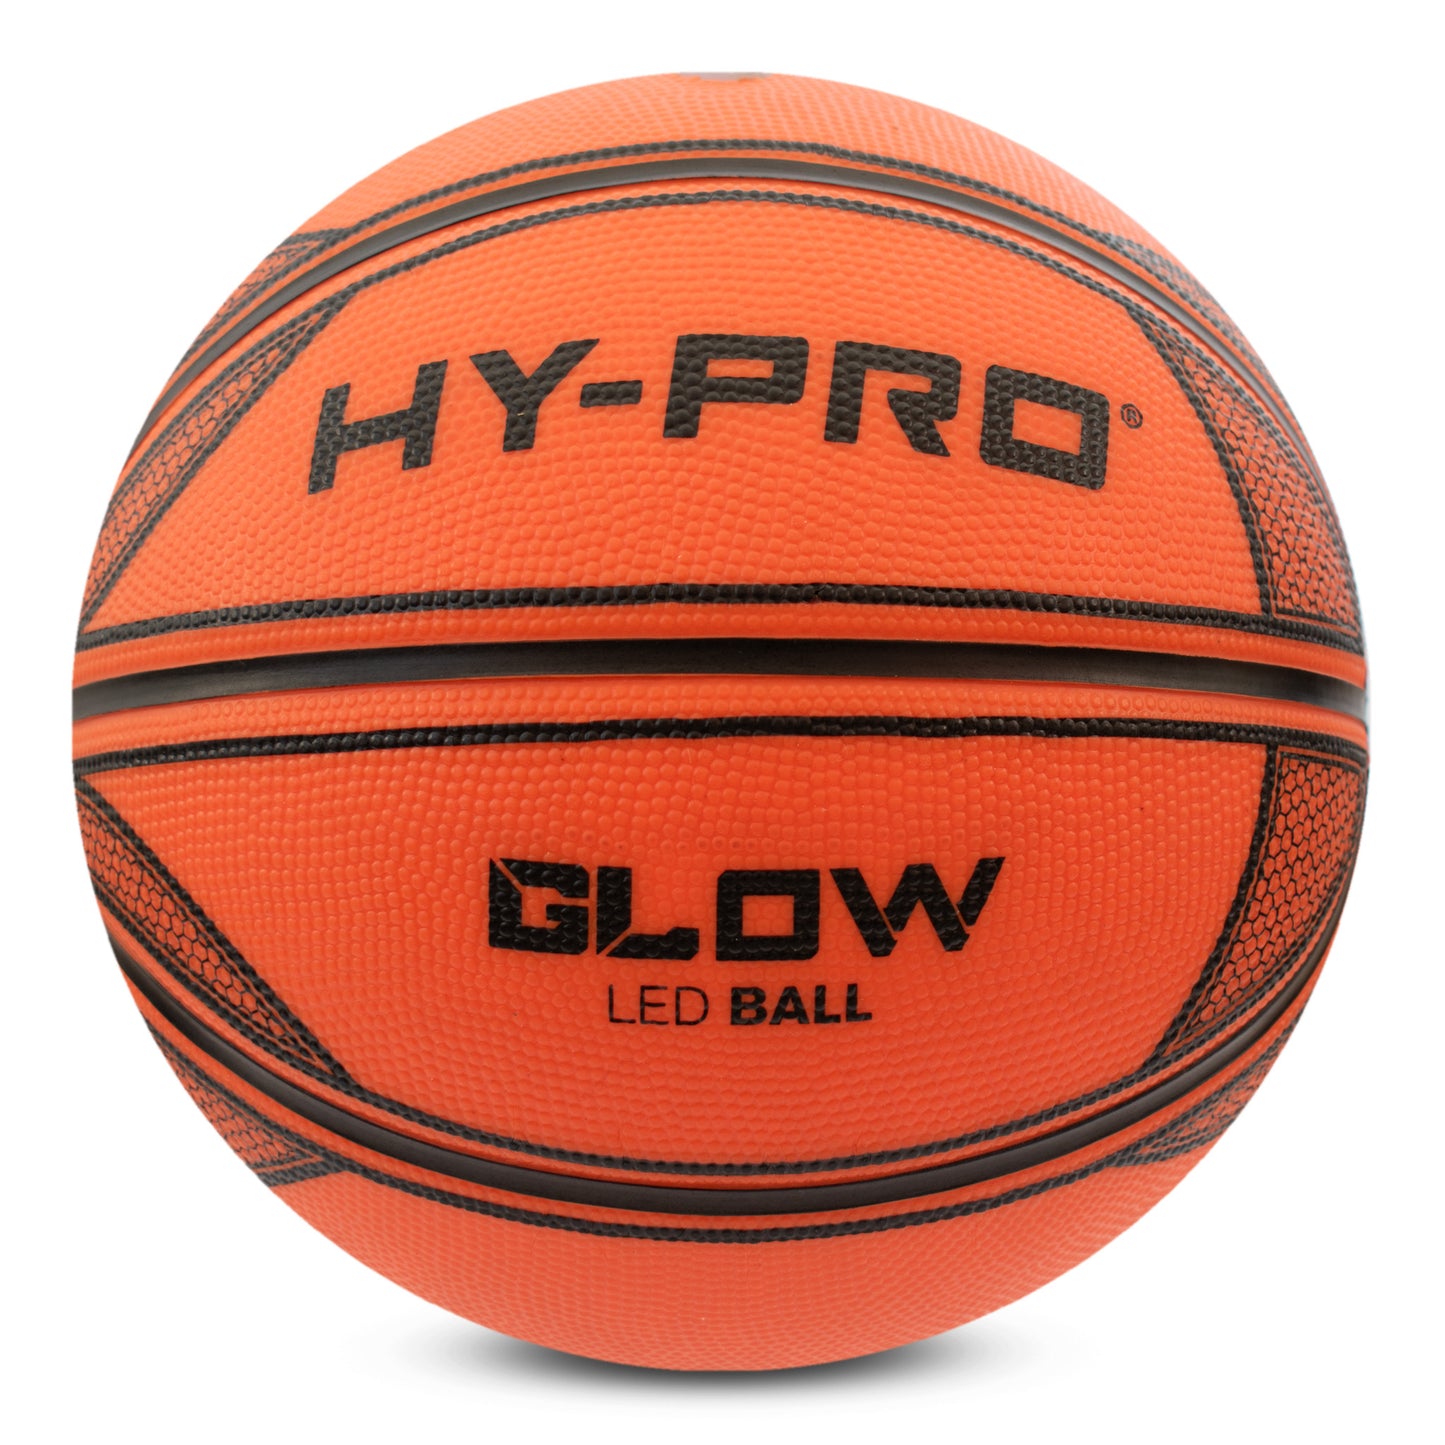 Hy-Pro LED Glow Basketball